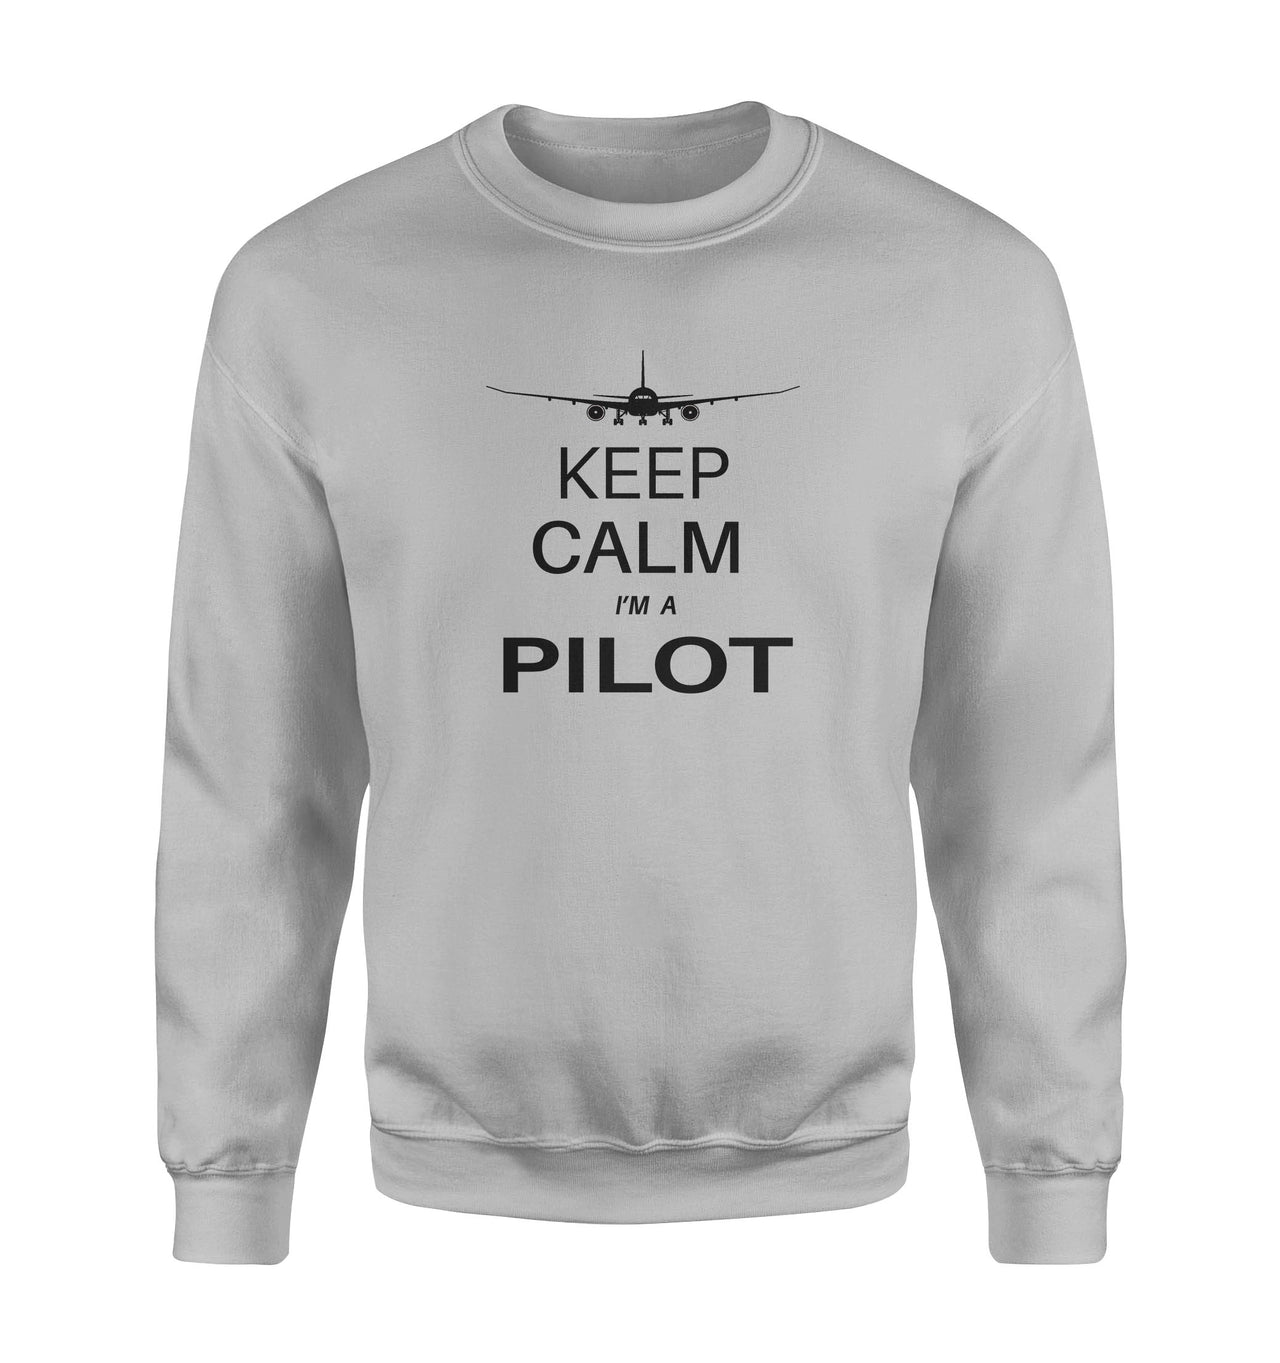 Pilot (777 Silhouette) Designed Sweatshirts